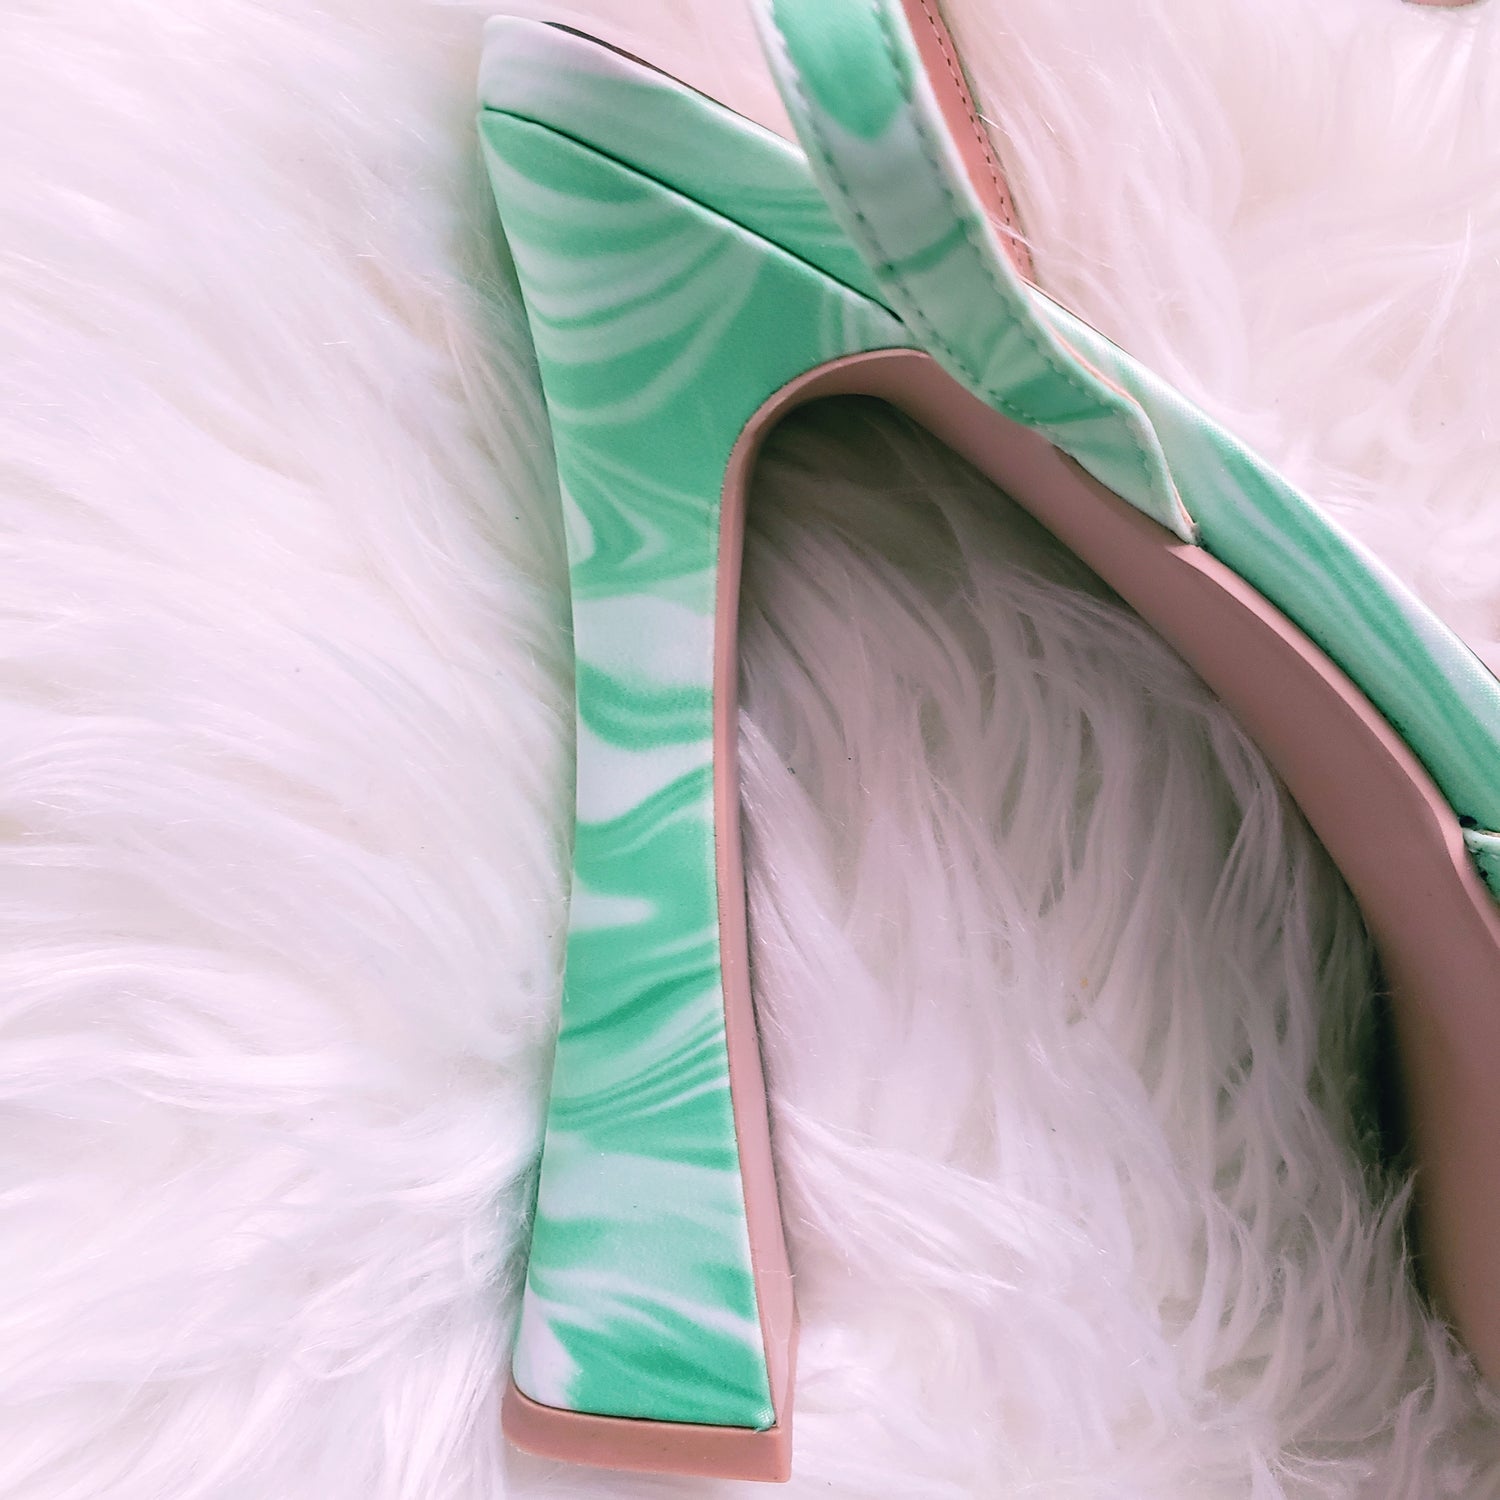 Satin Marble swirl platform heels with strappy design and open toe. Flared platform heel.